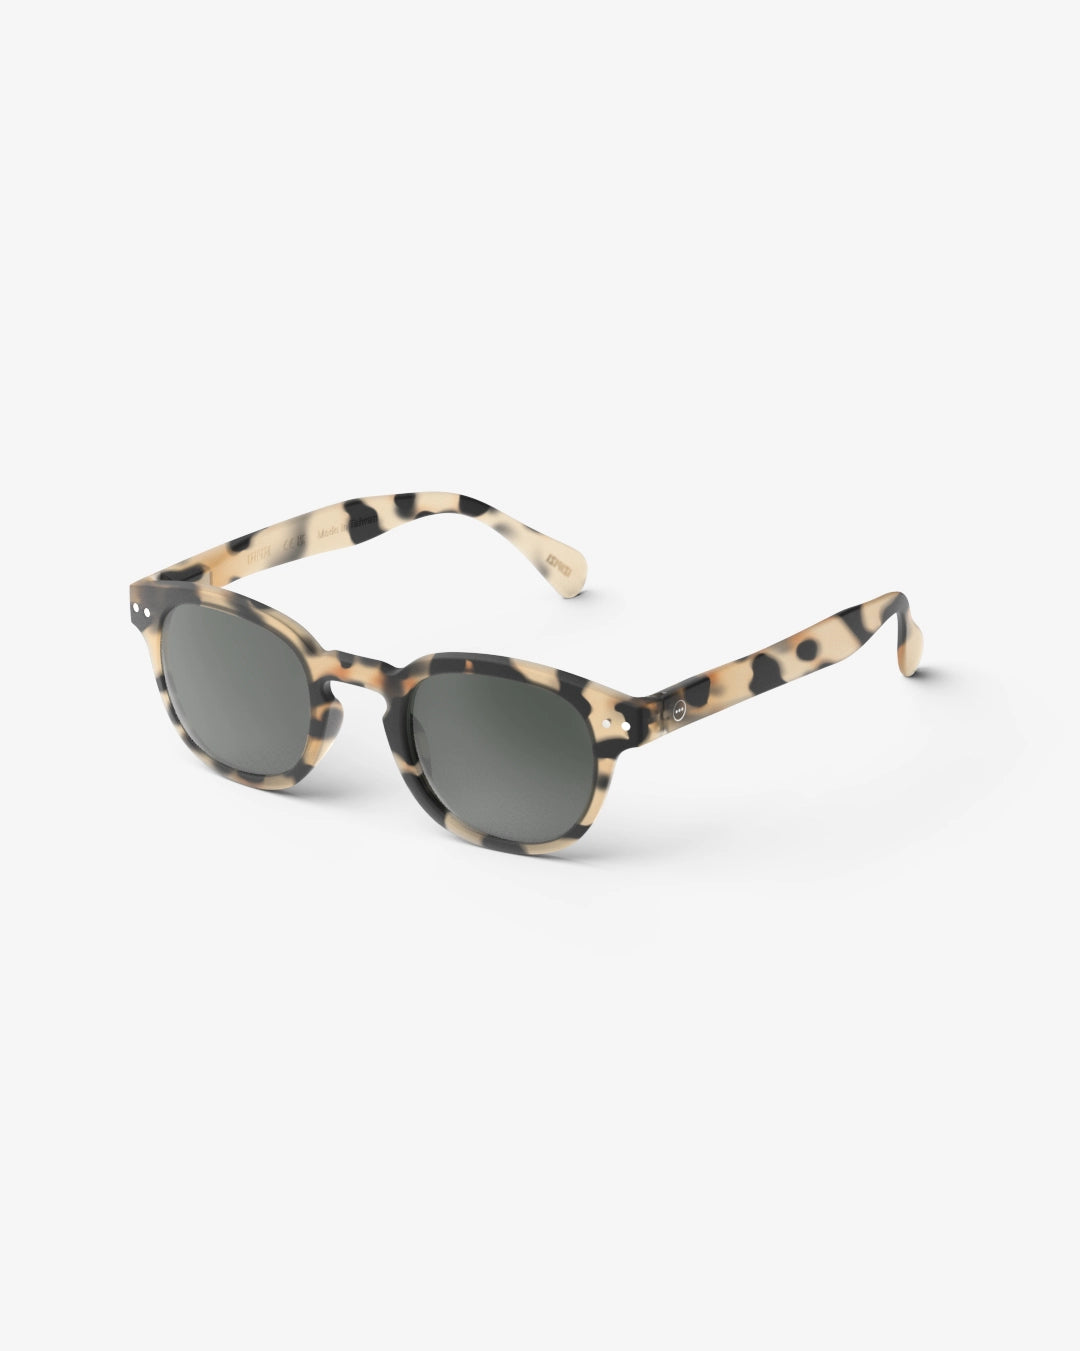 Sunglasses ‘Light Tortoise’ #C